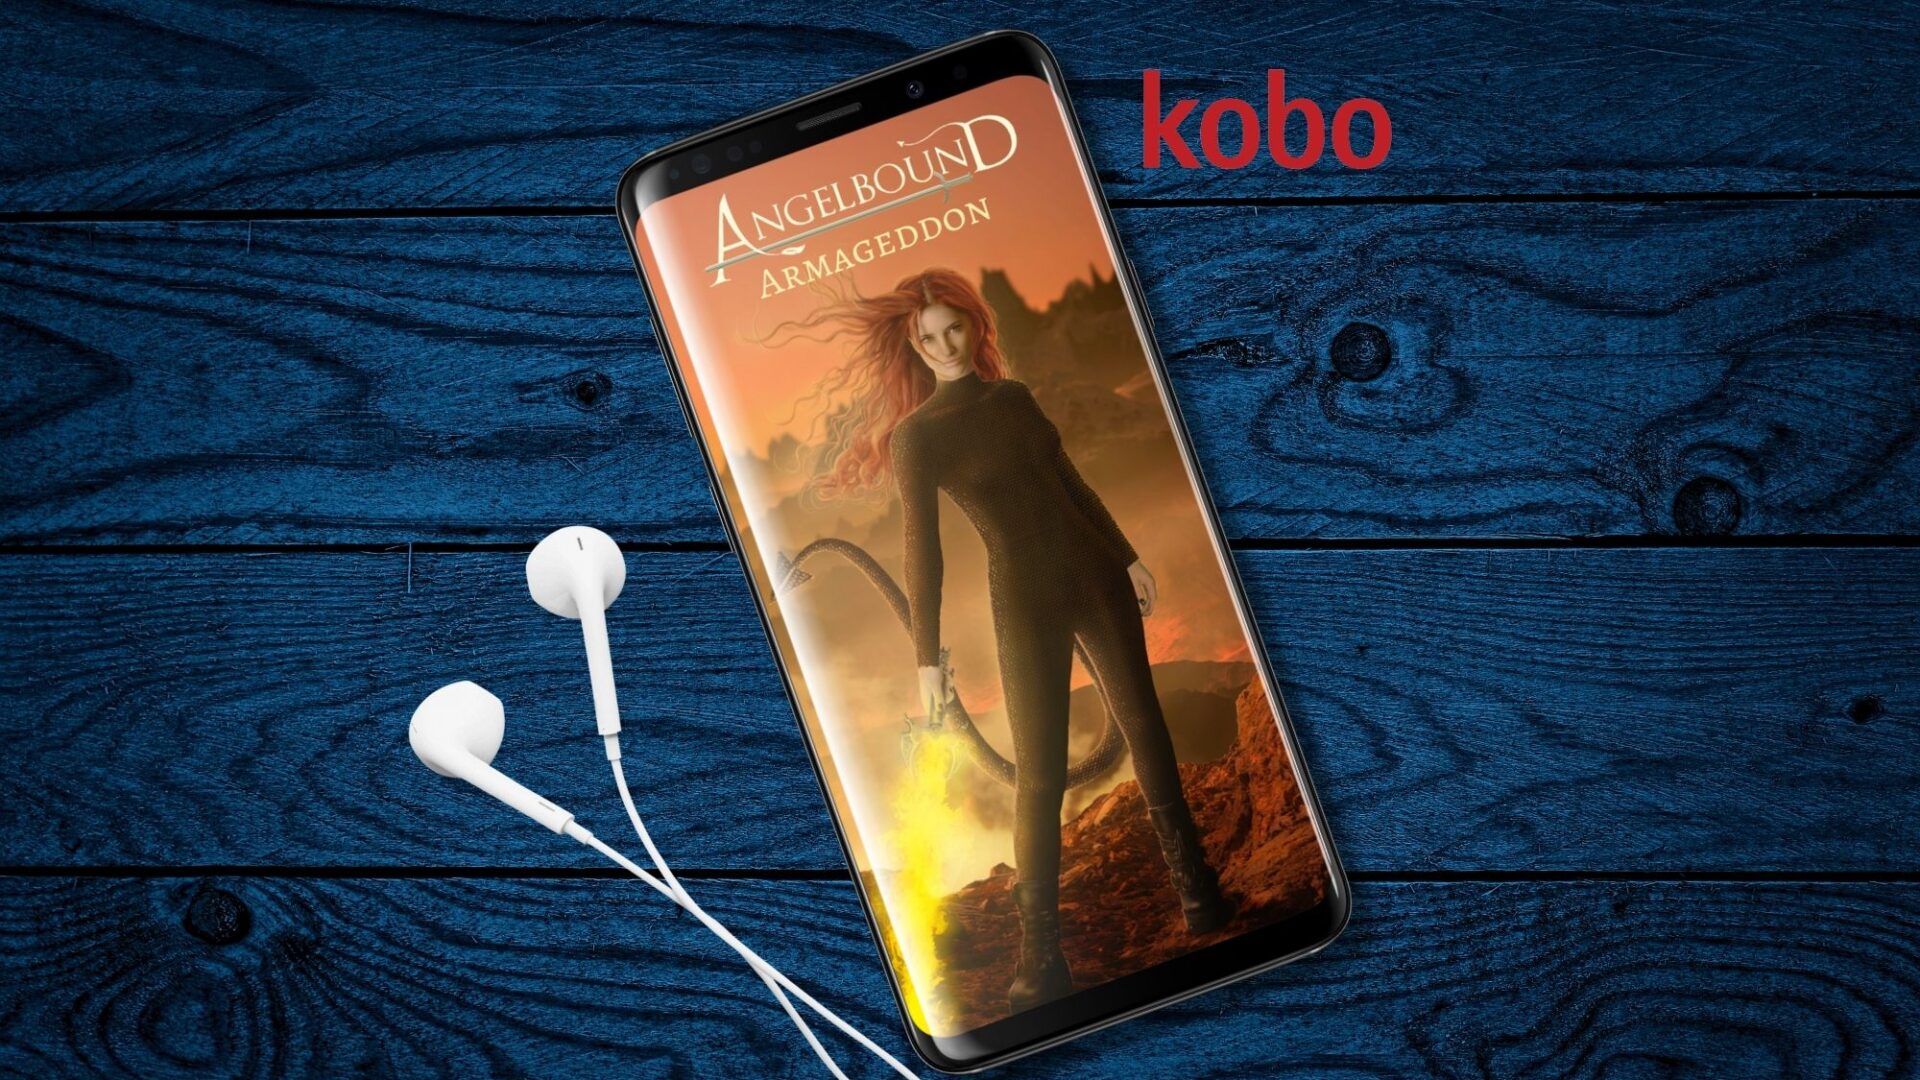 Audiobook Alert - ARMAGEDDON on Kobo!